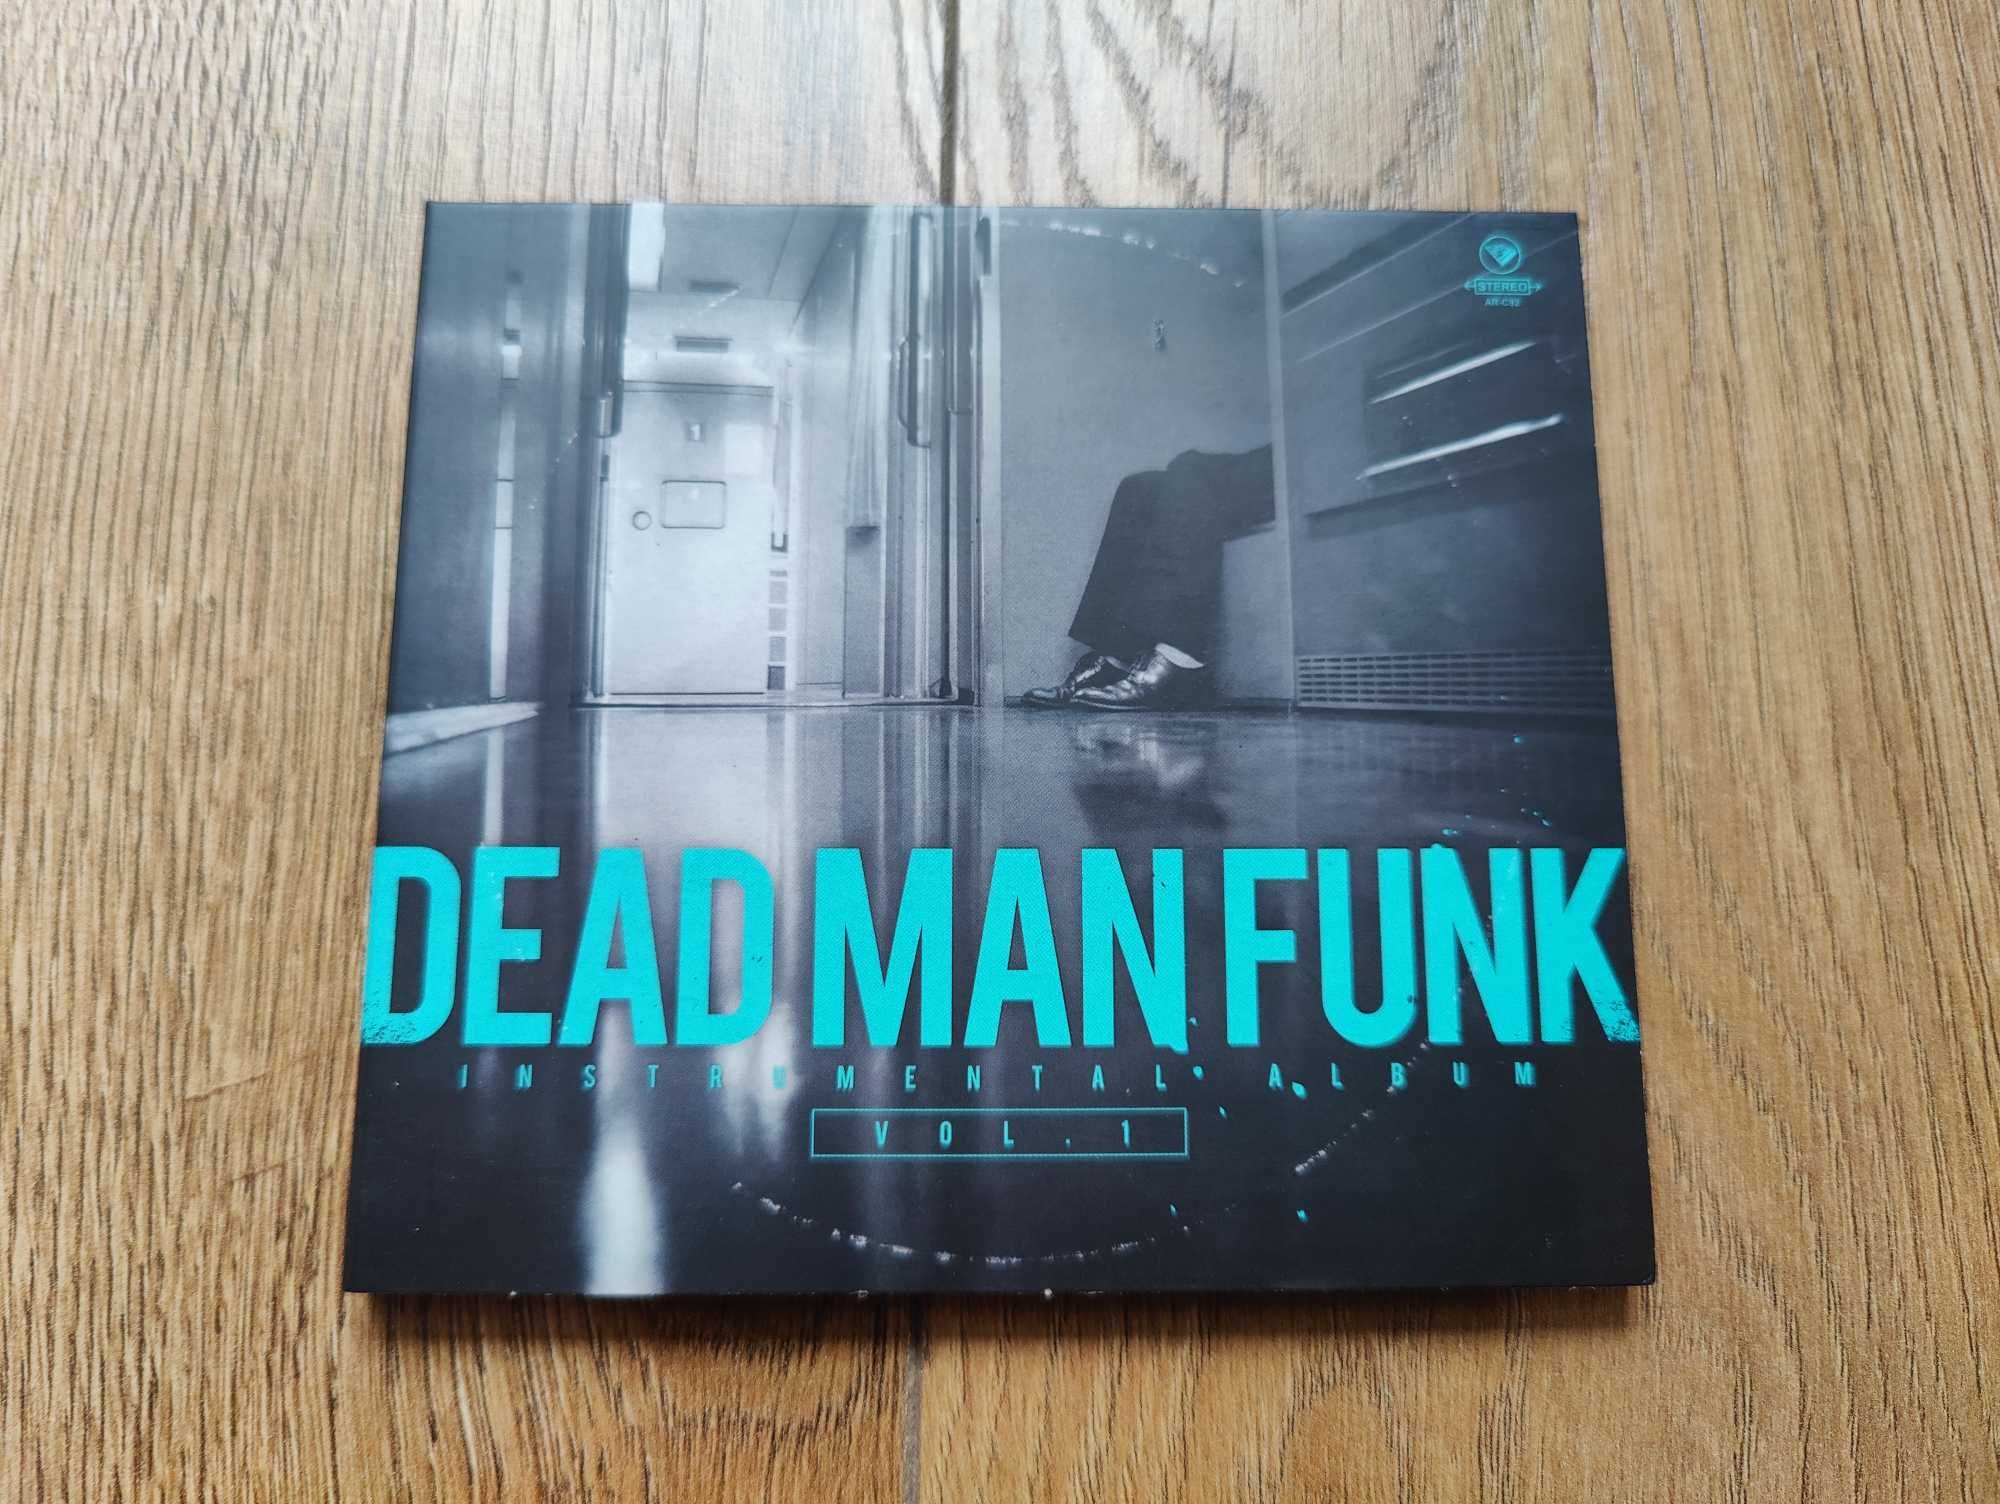 Dead man funk - Instrumental album Vol. 1 (CD)